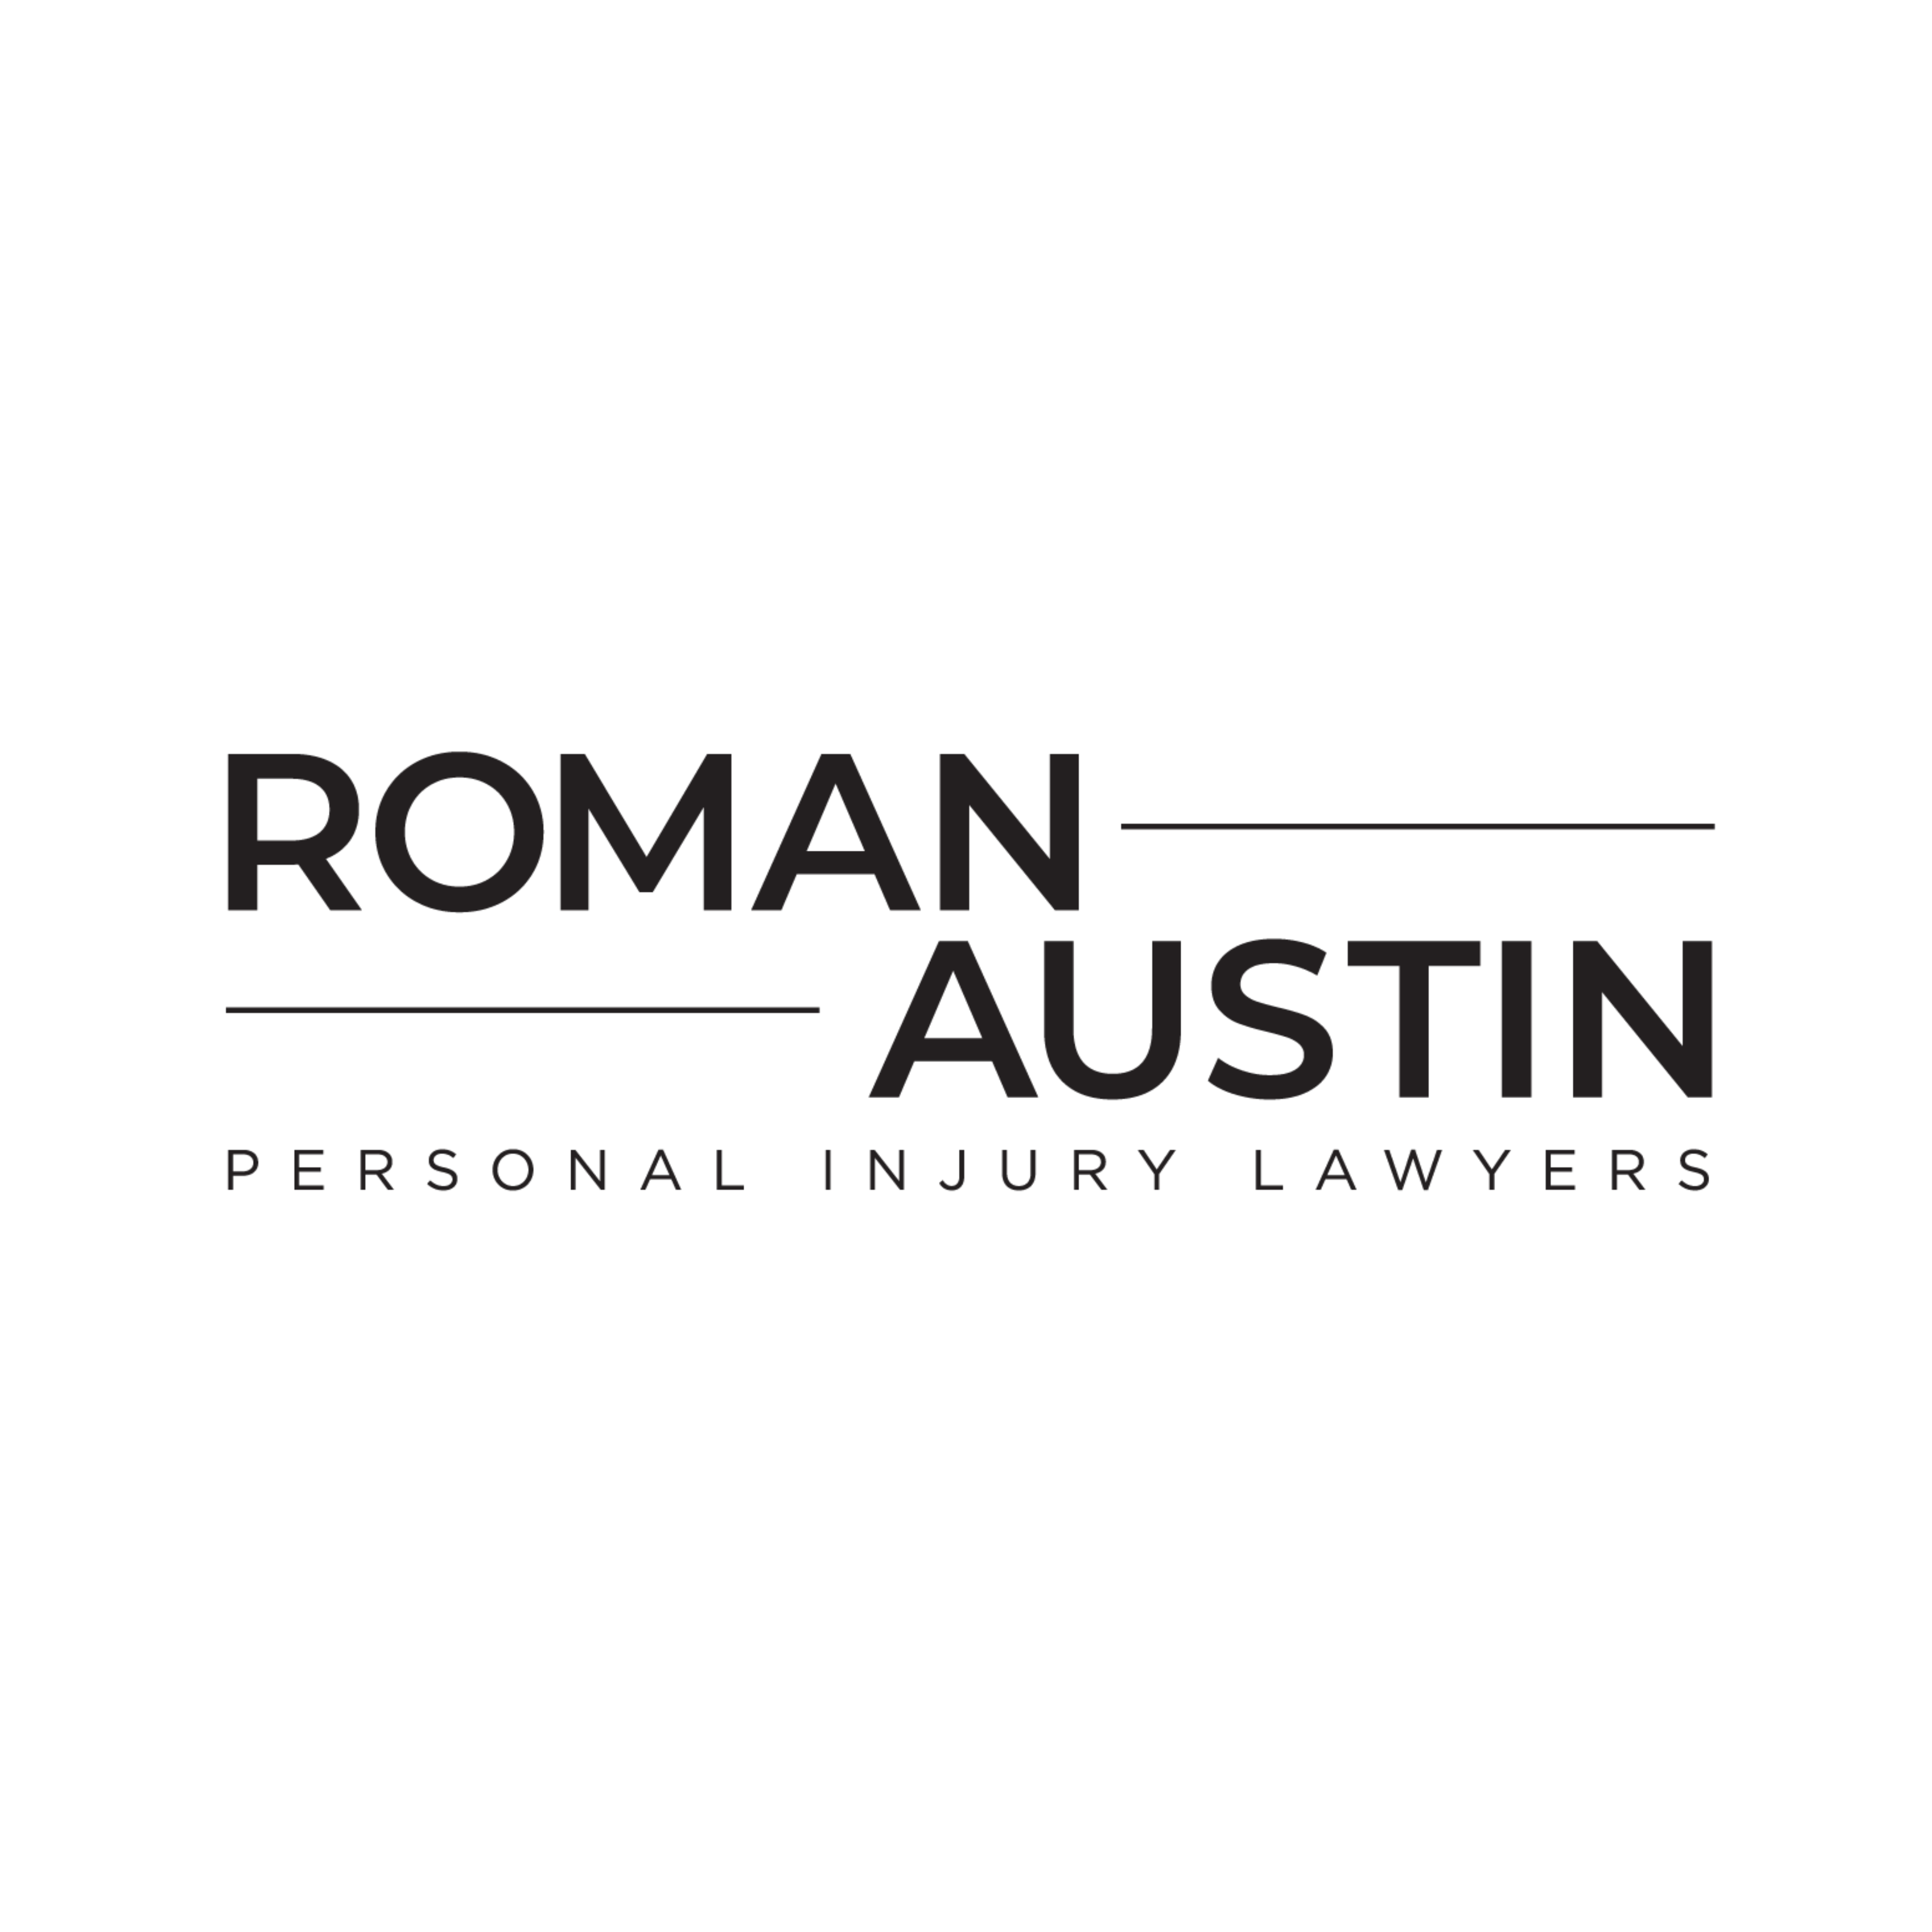 Roman Austin Personal Injury Lawyers